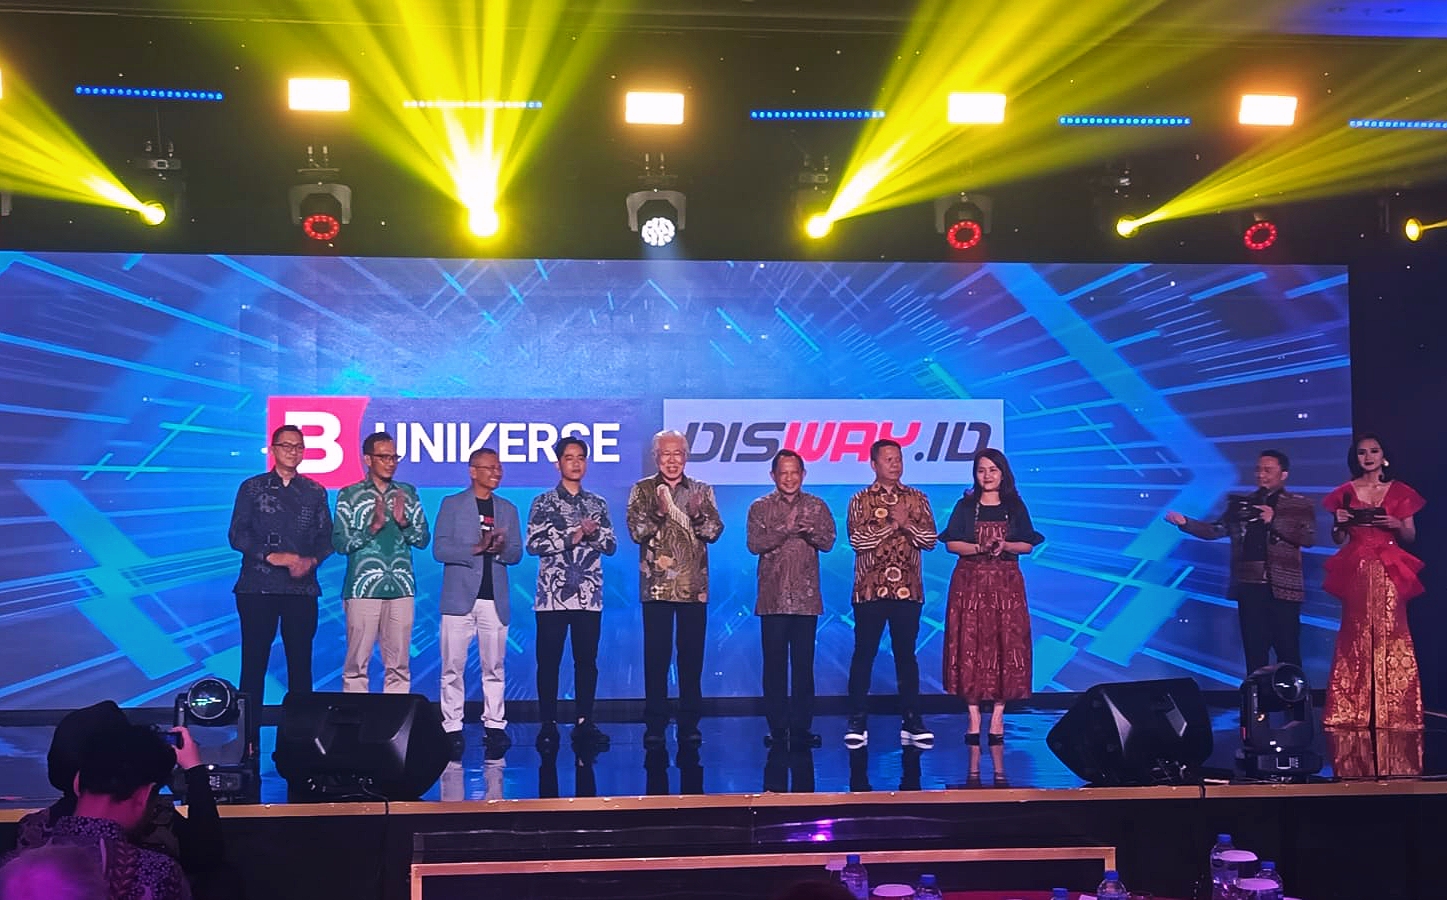 B-Universe dan Disway.id Resmi Jalin Kerja Sama, Targertkan 400 Media Network